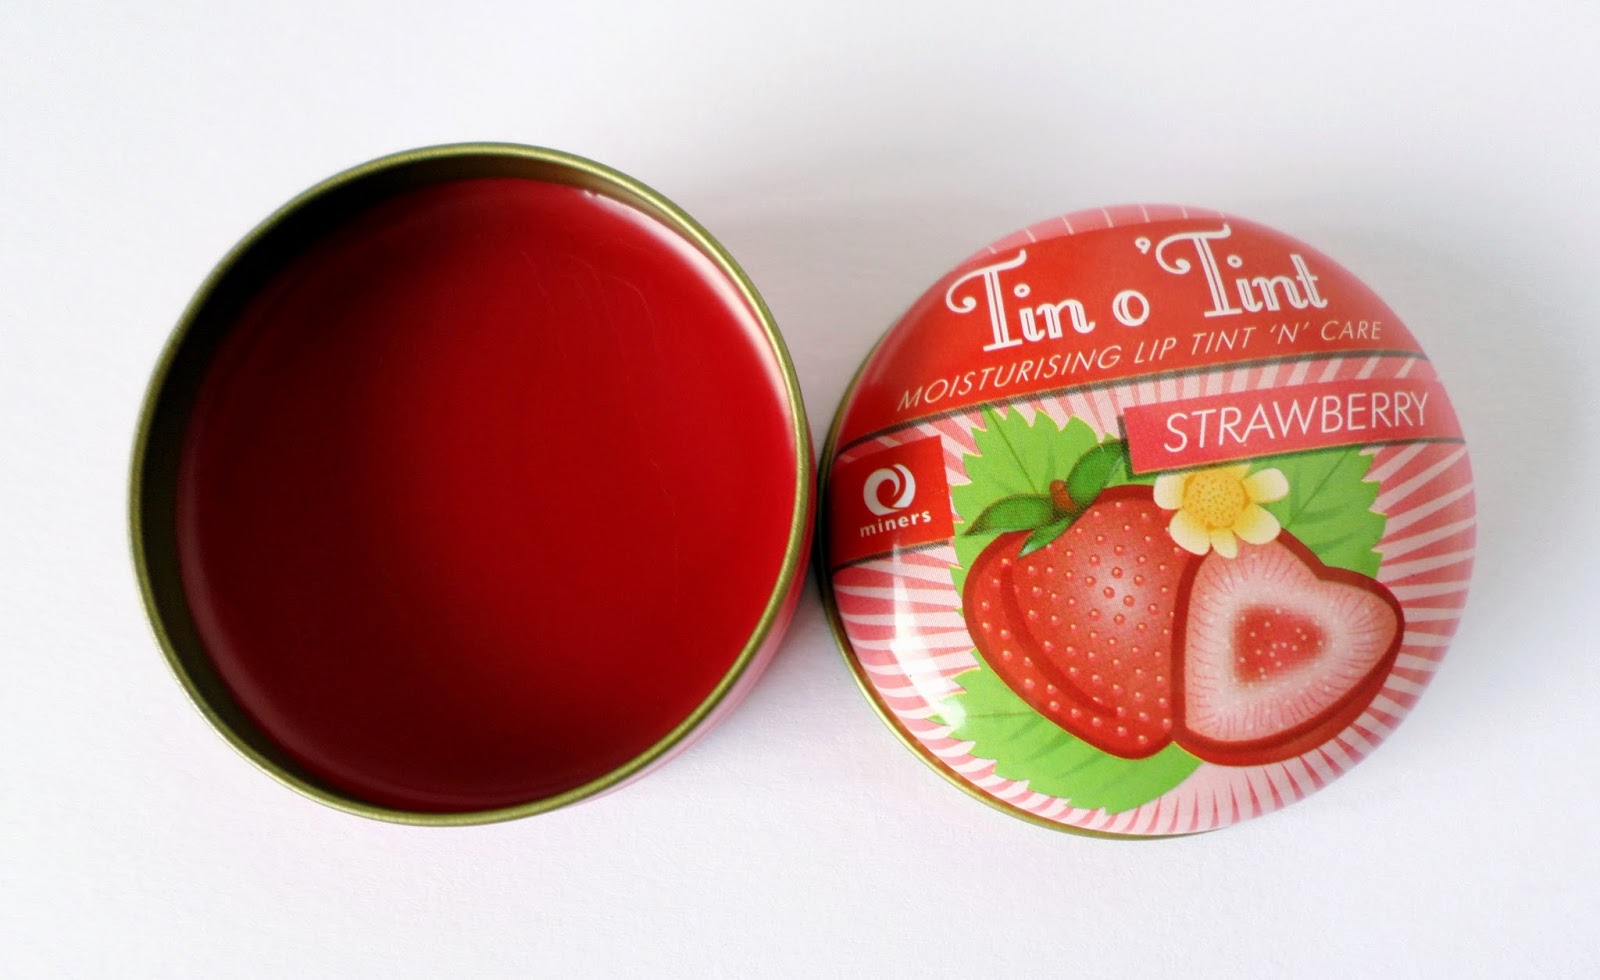 Miners Cosmetics Strawberry Tin o' Tint Tinted Lip Balm 